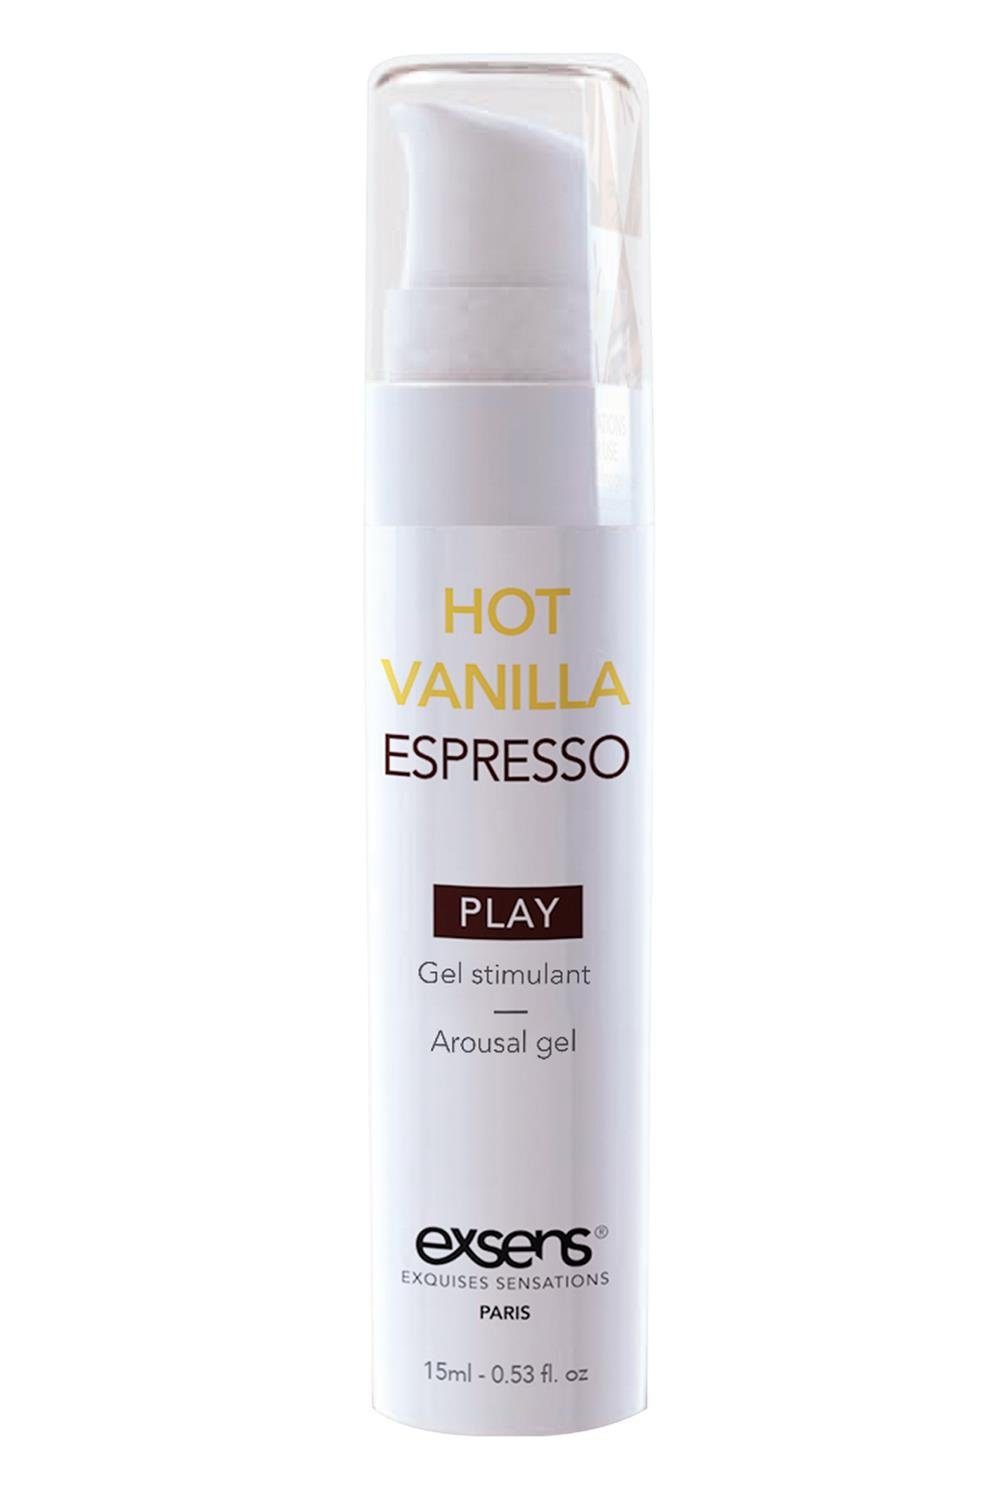 Exsens Gleit- und Massagegel Exsens Arousal Gel Hot Vanilla Espresso 15ml, Fast sofortiger Kühleffekt | Gleitgele